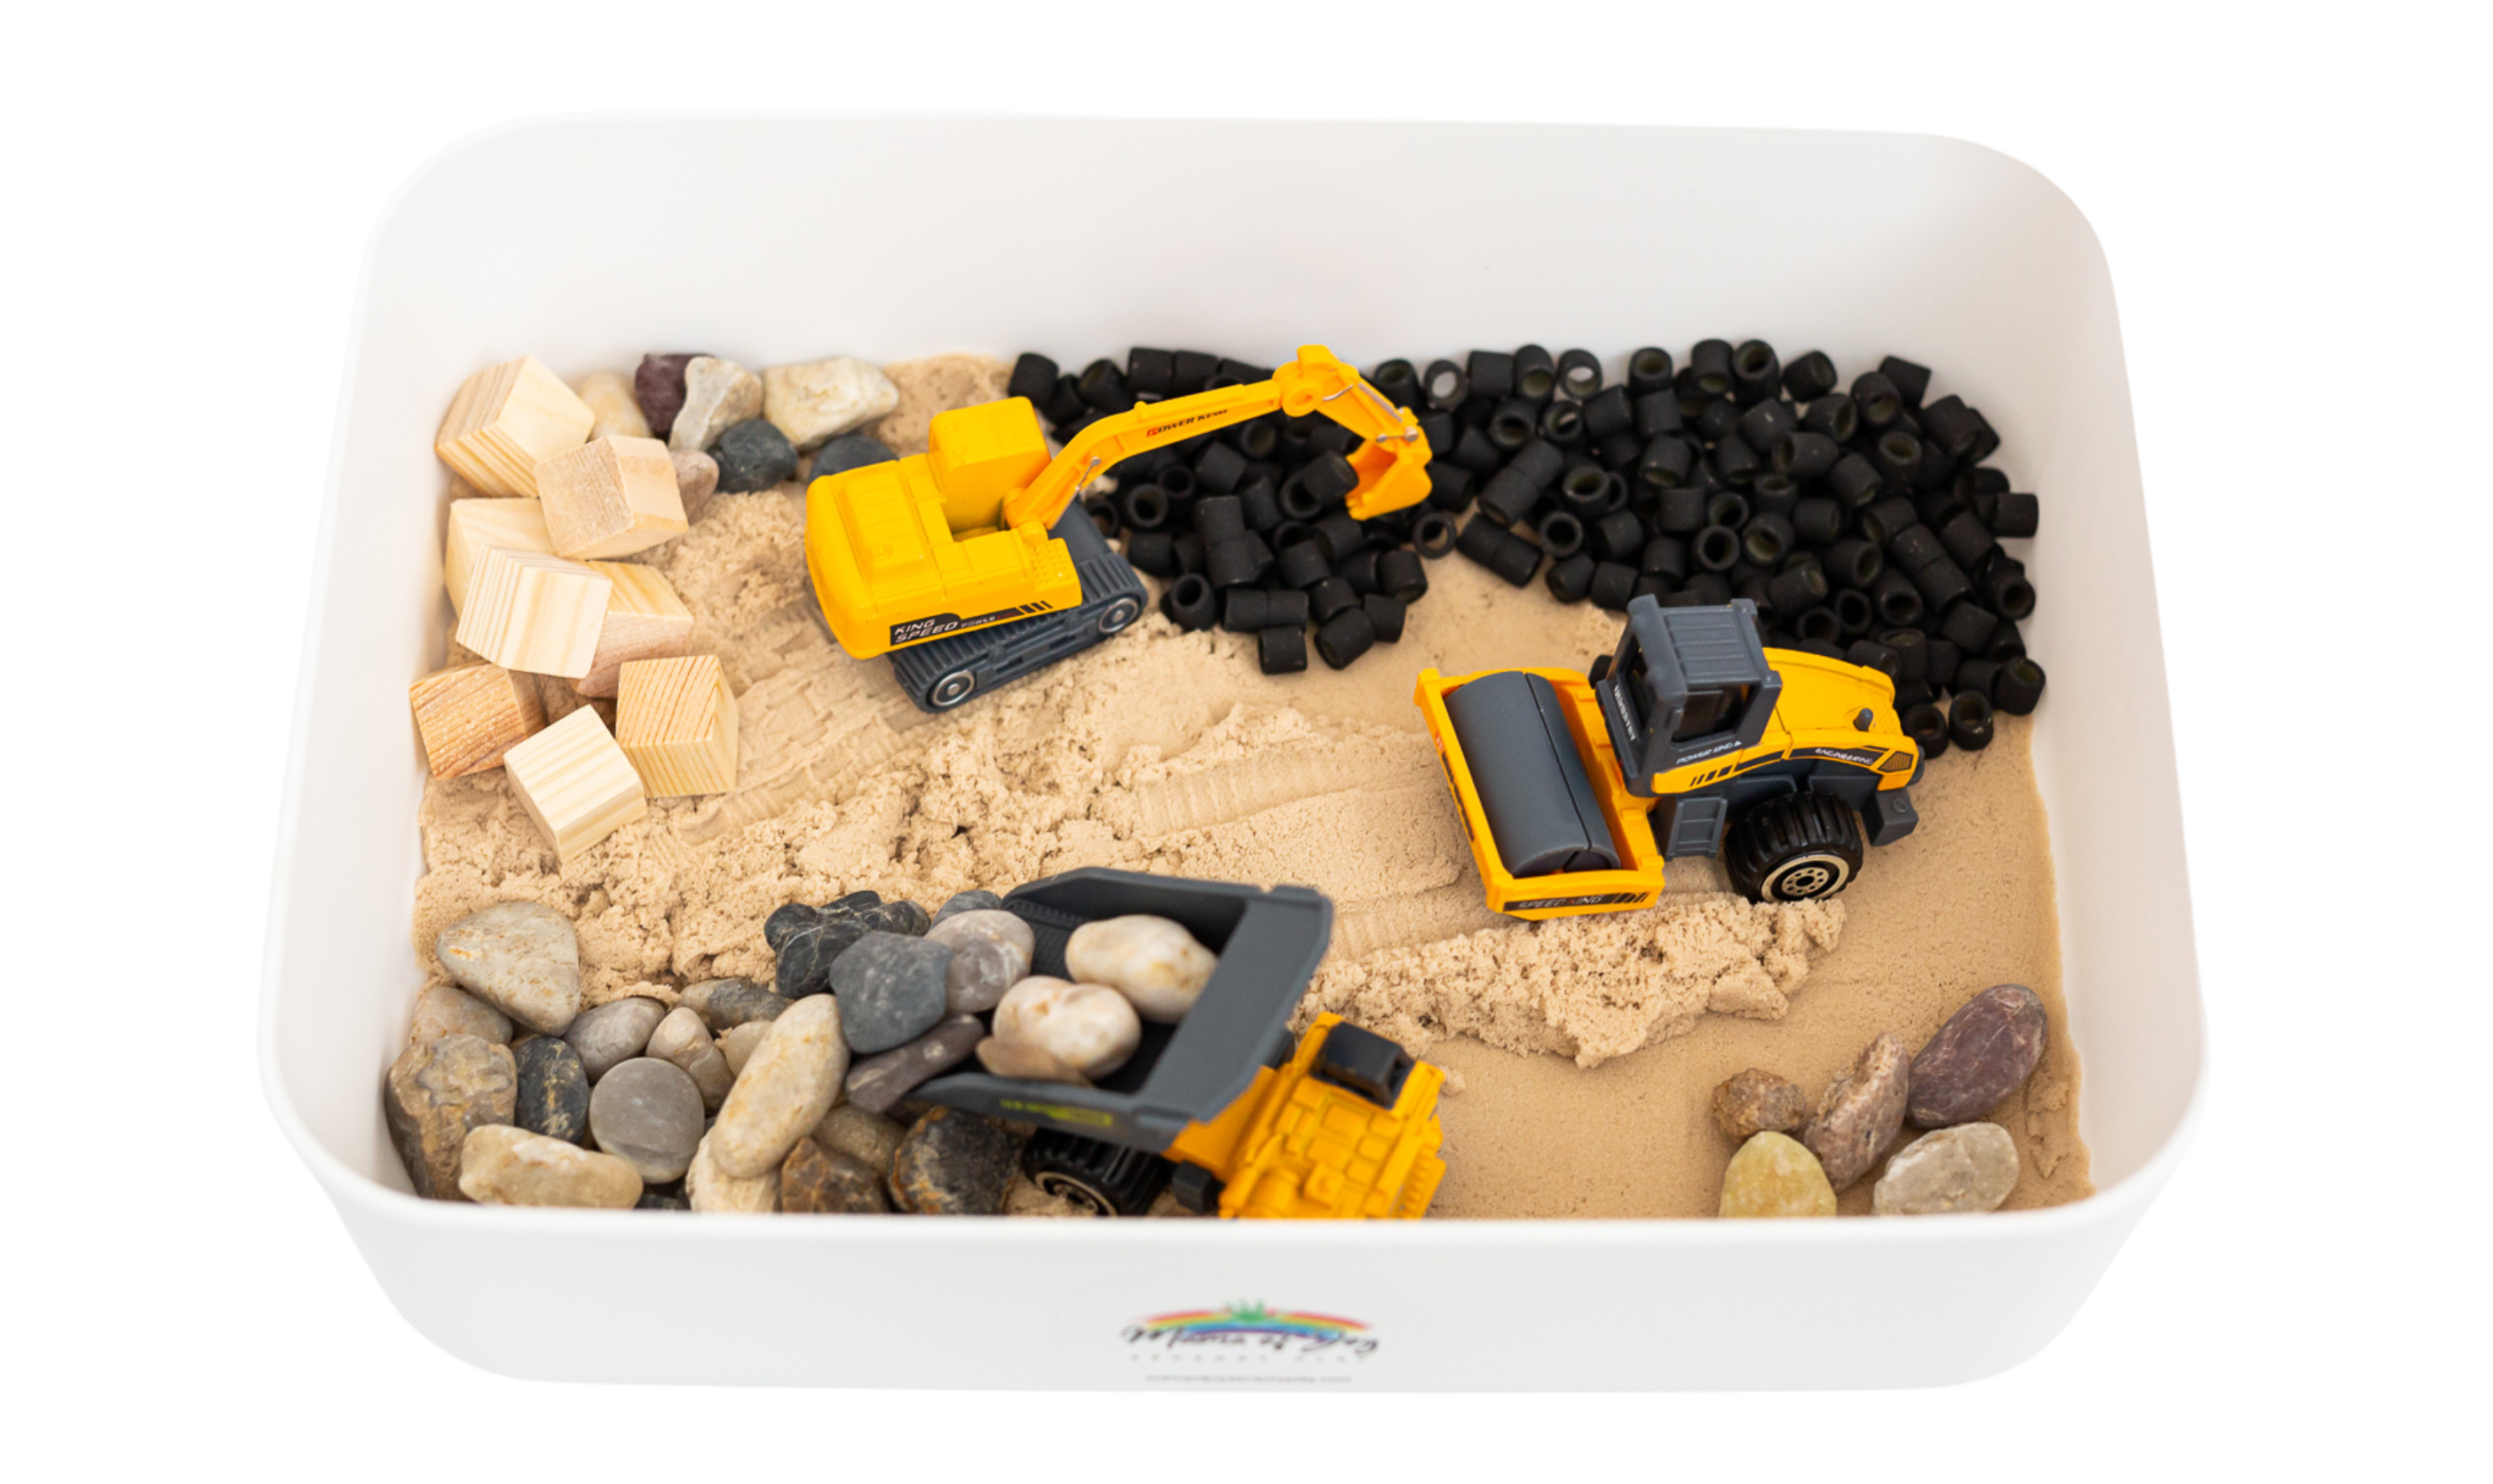 Construction Sensory Bin, Construction Sensory Kit, Kinetic Sand, Sensory  Kit for Kids, Sensory Bin, Sensory Kit, Sensory Bins for Toddlers 